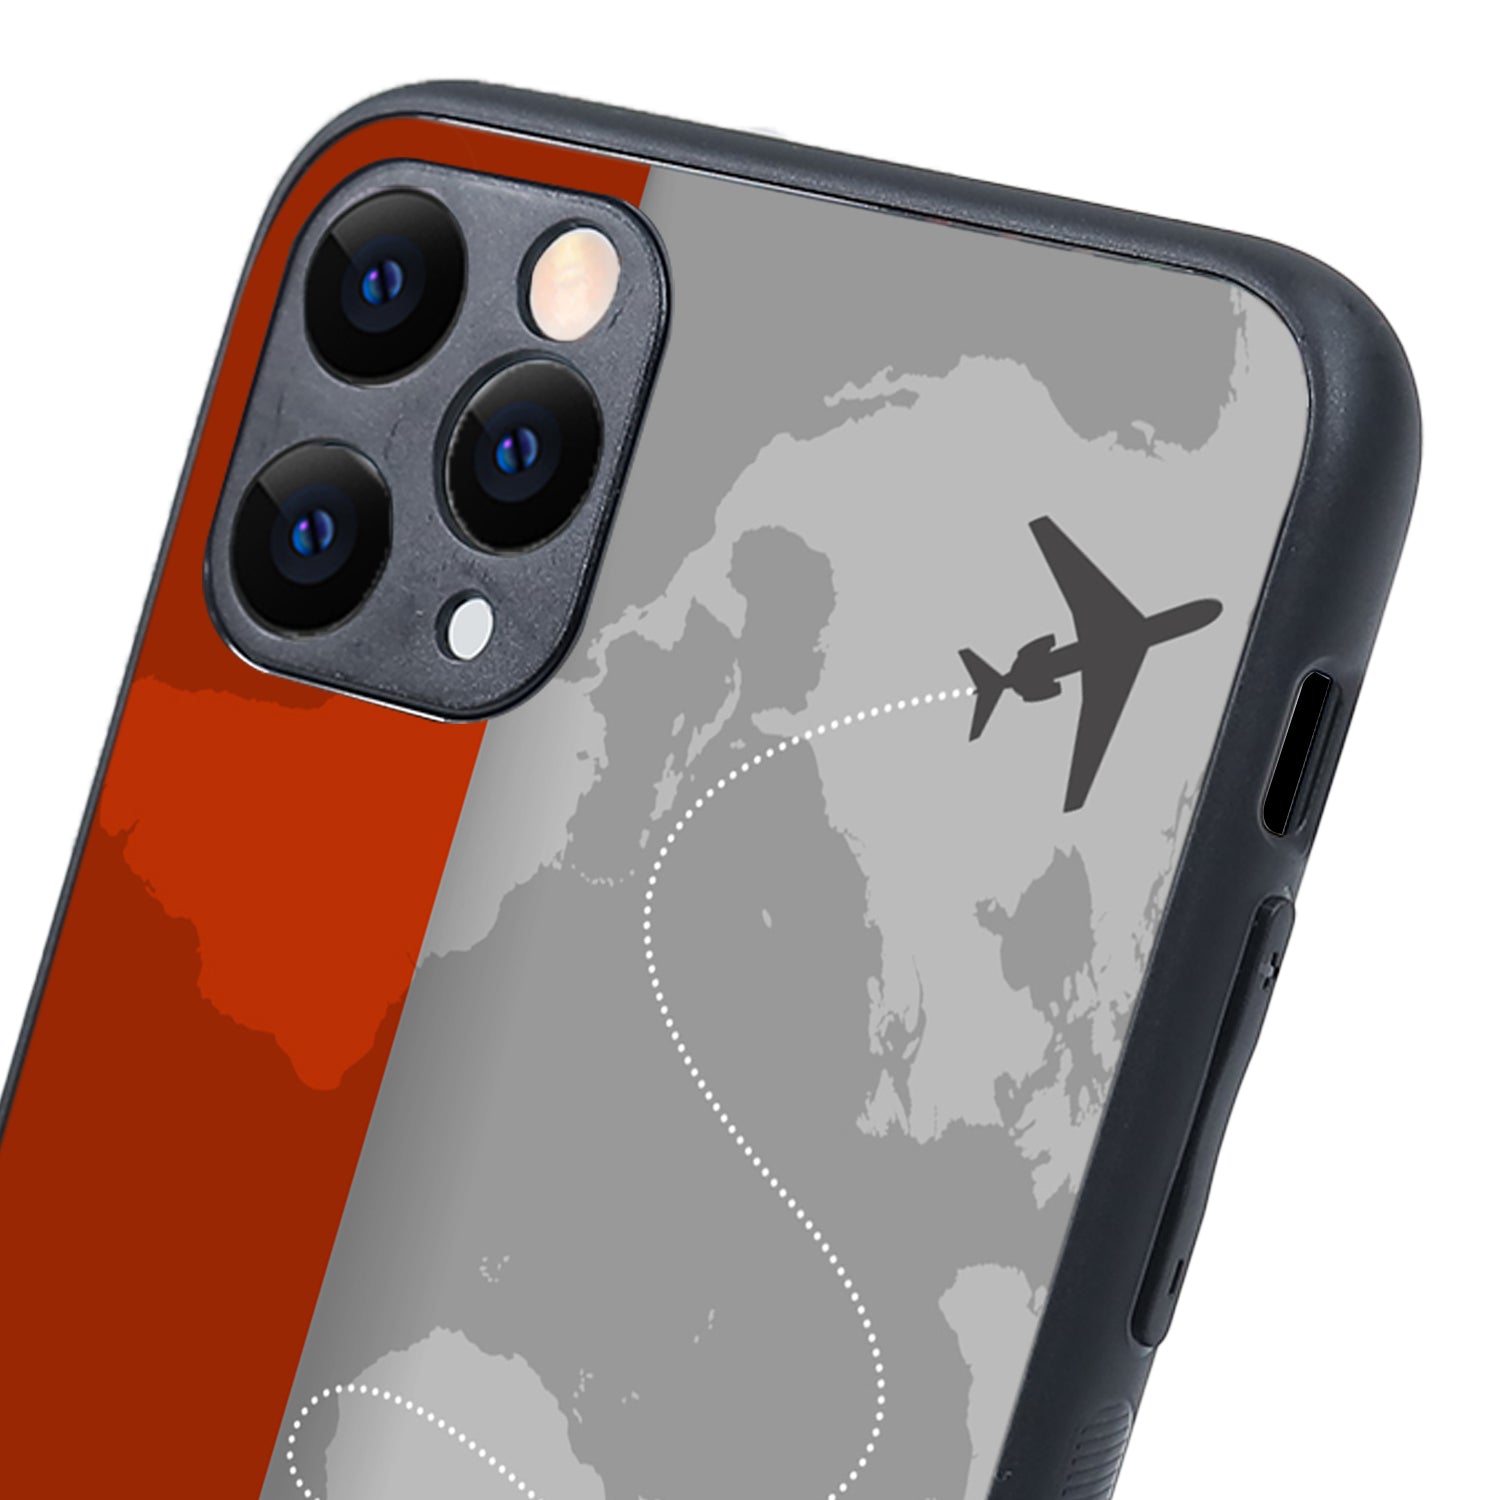 World Tour Travel iPhone 11 Pro Max Case